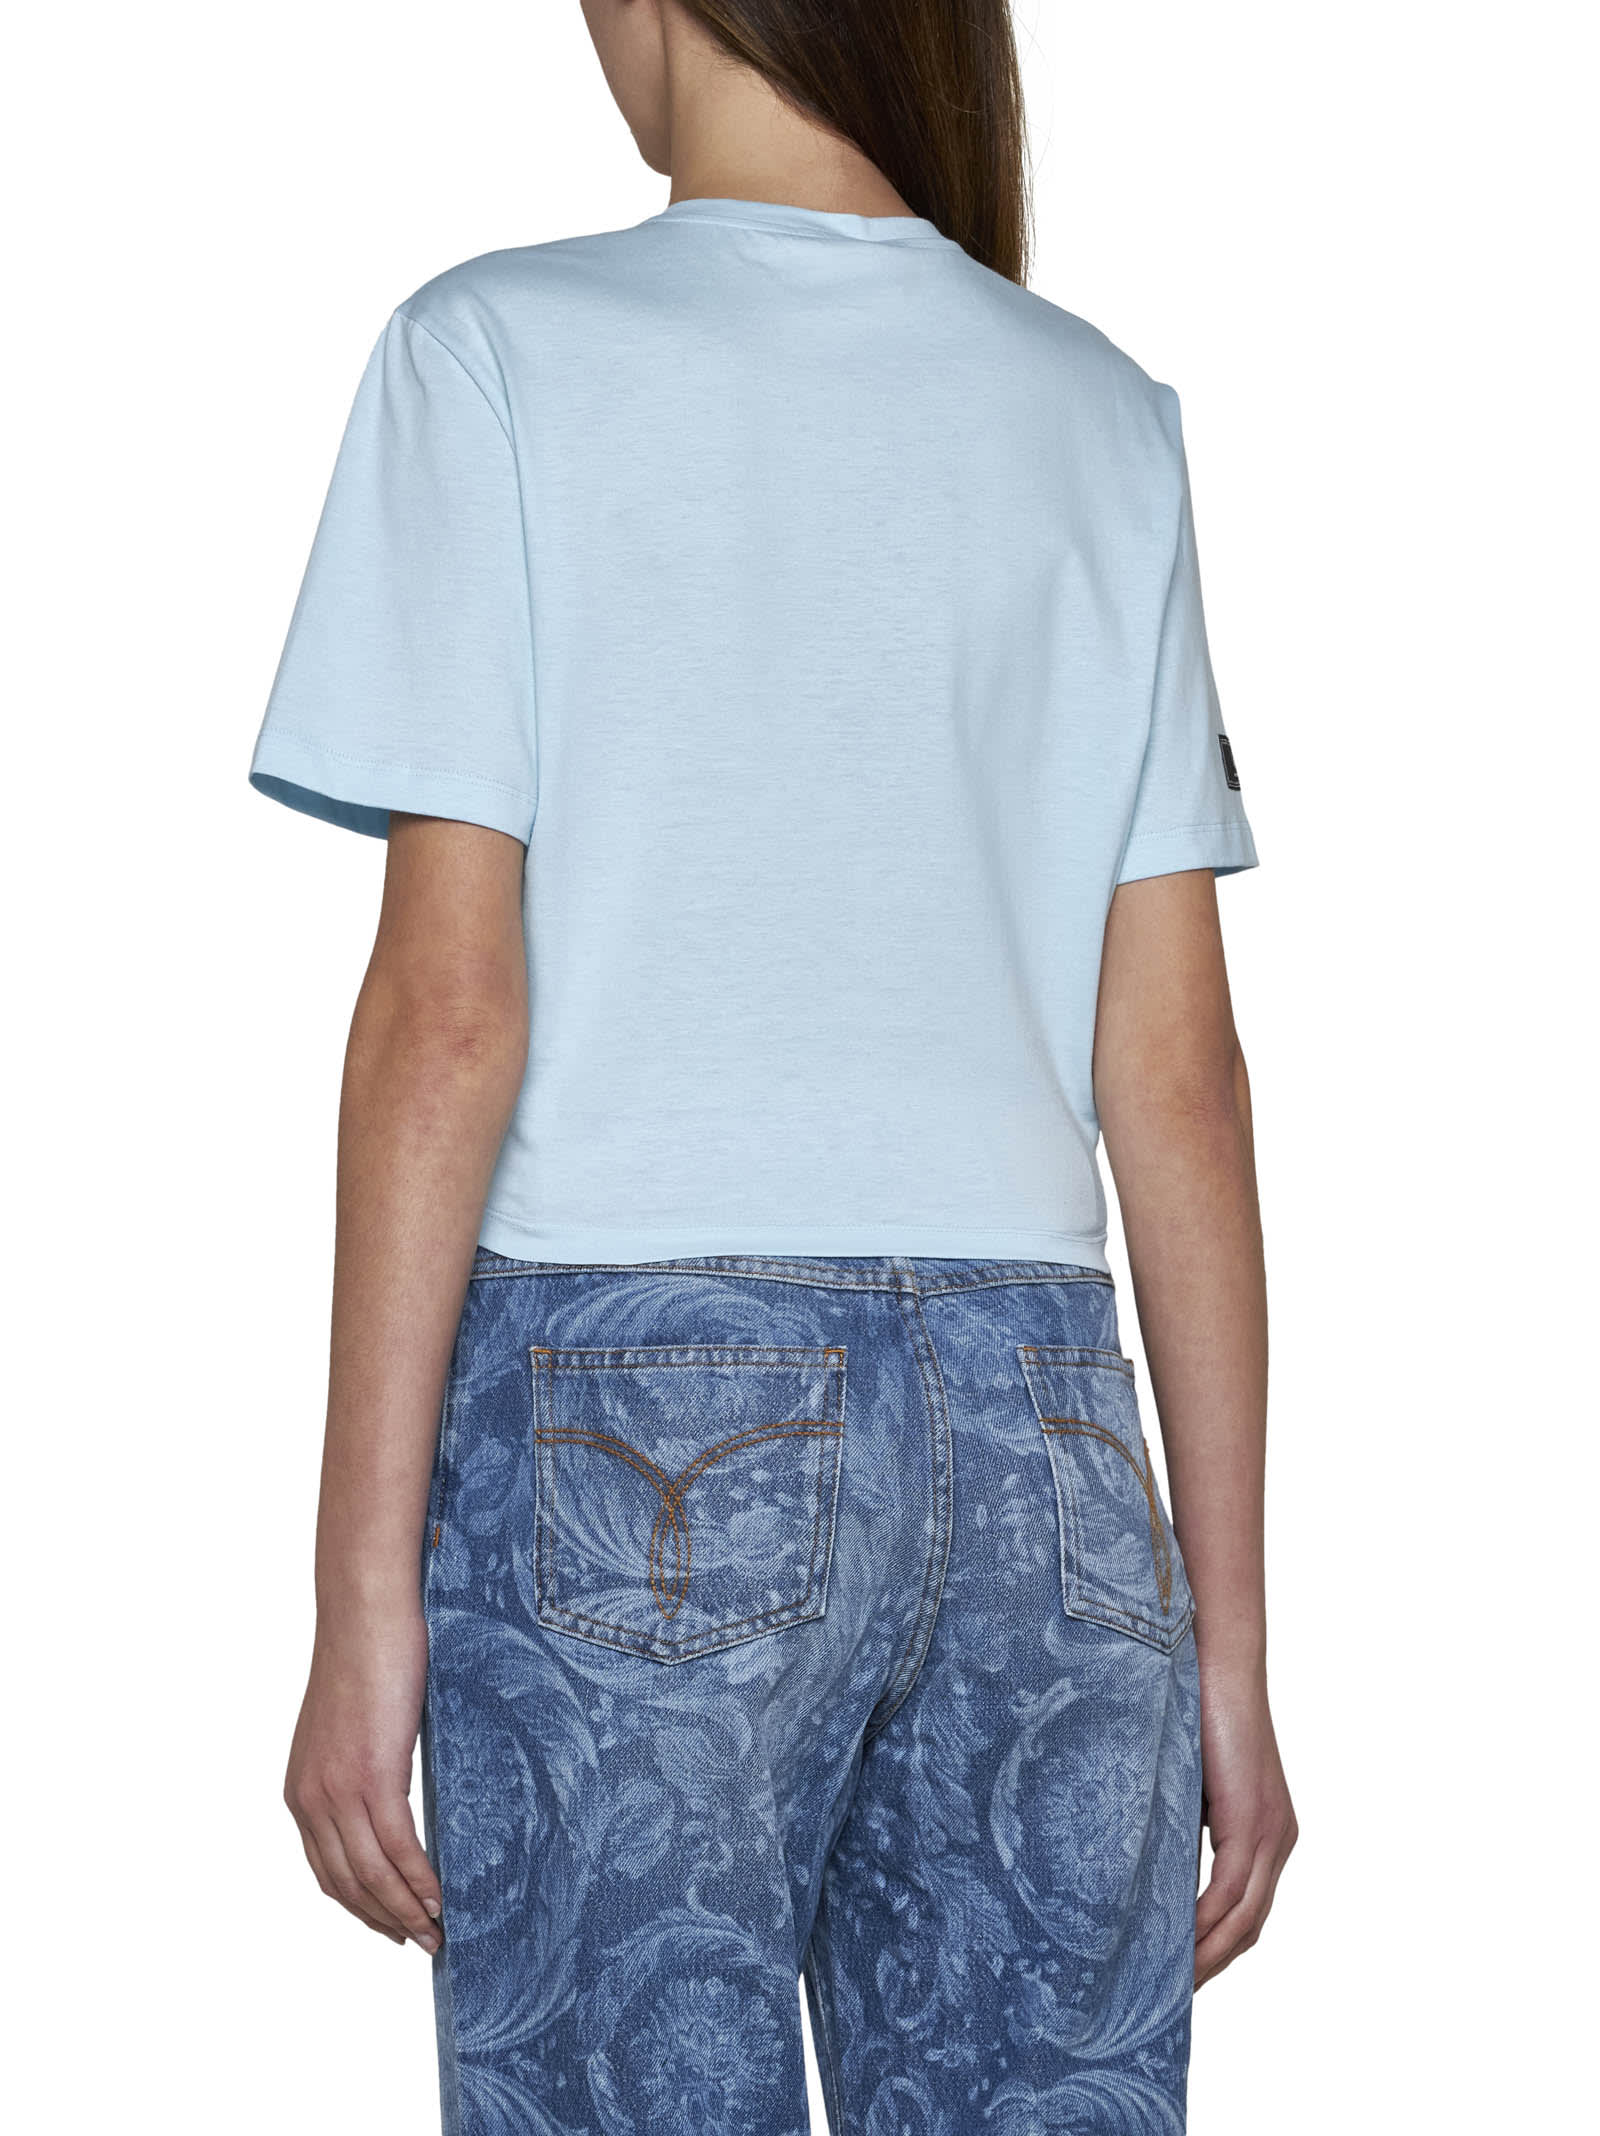 Shop Versace T-shirt In Pale Blue+bianco